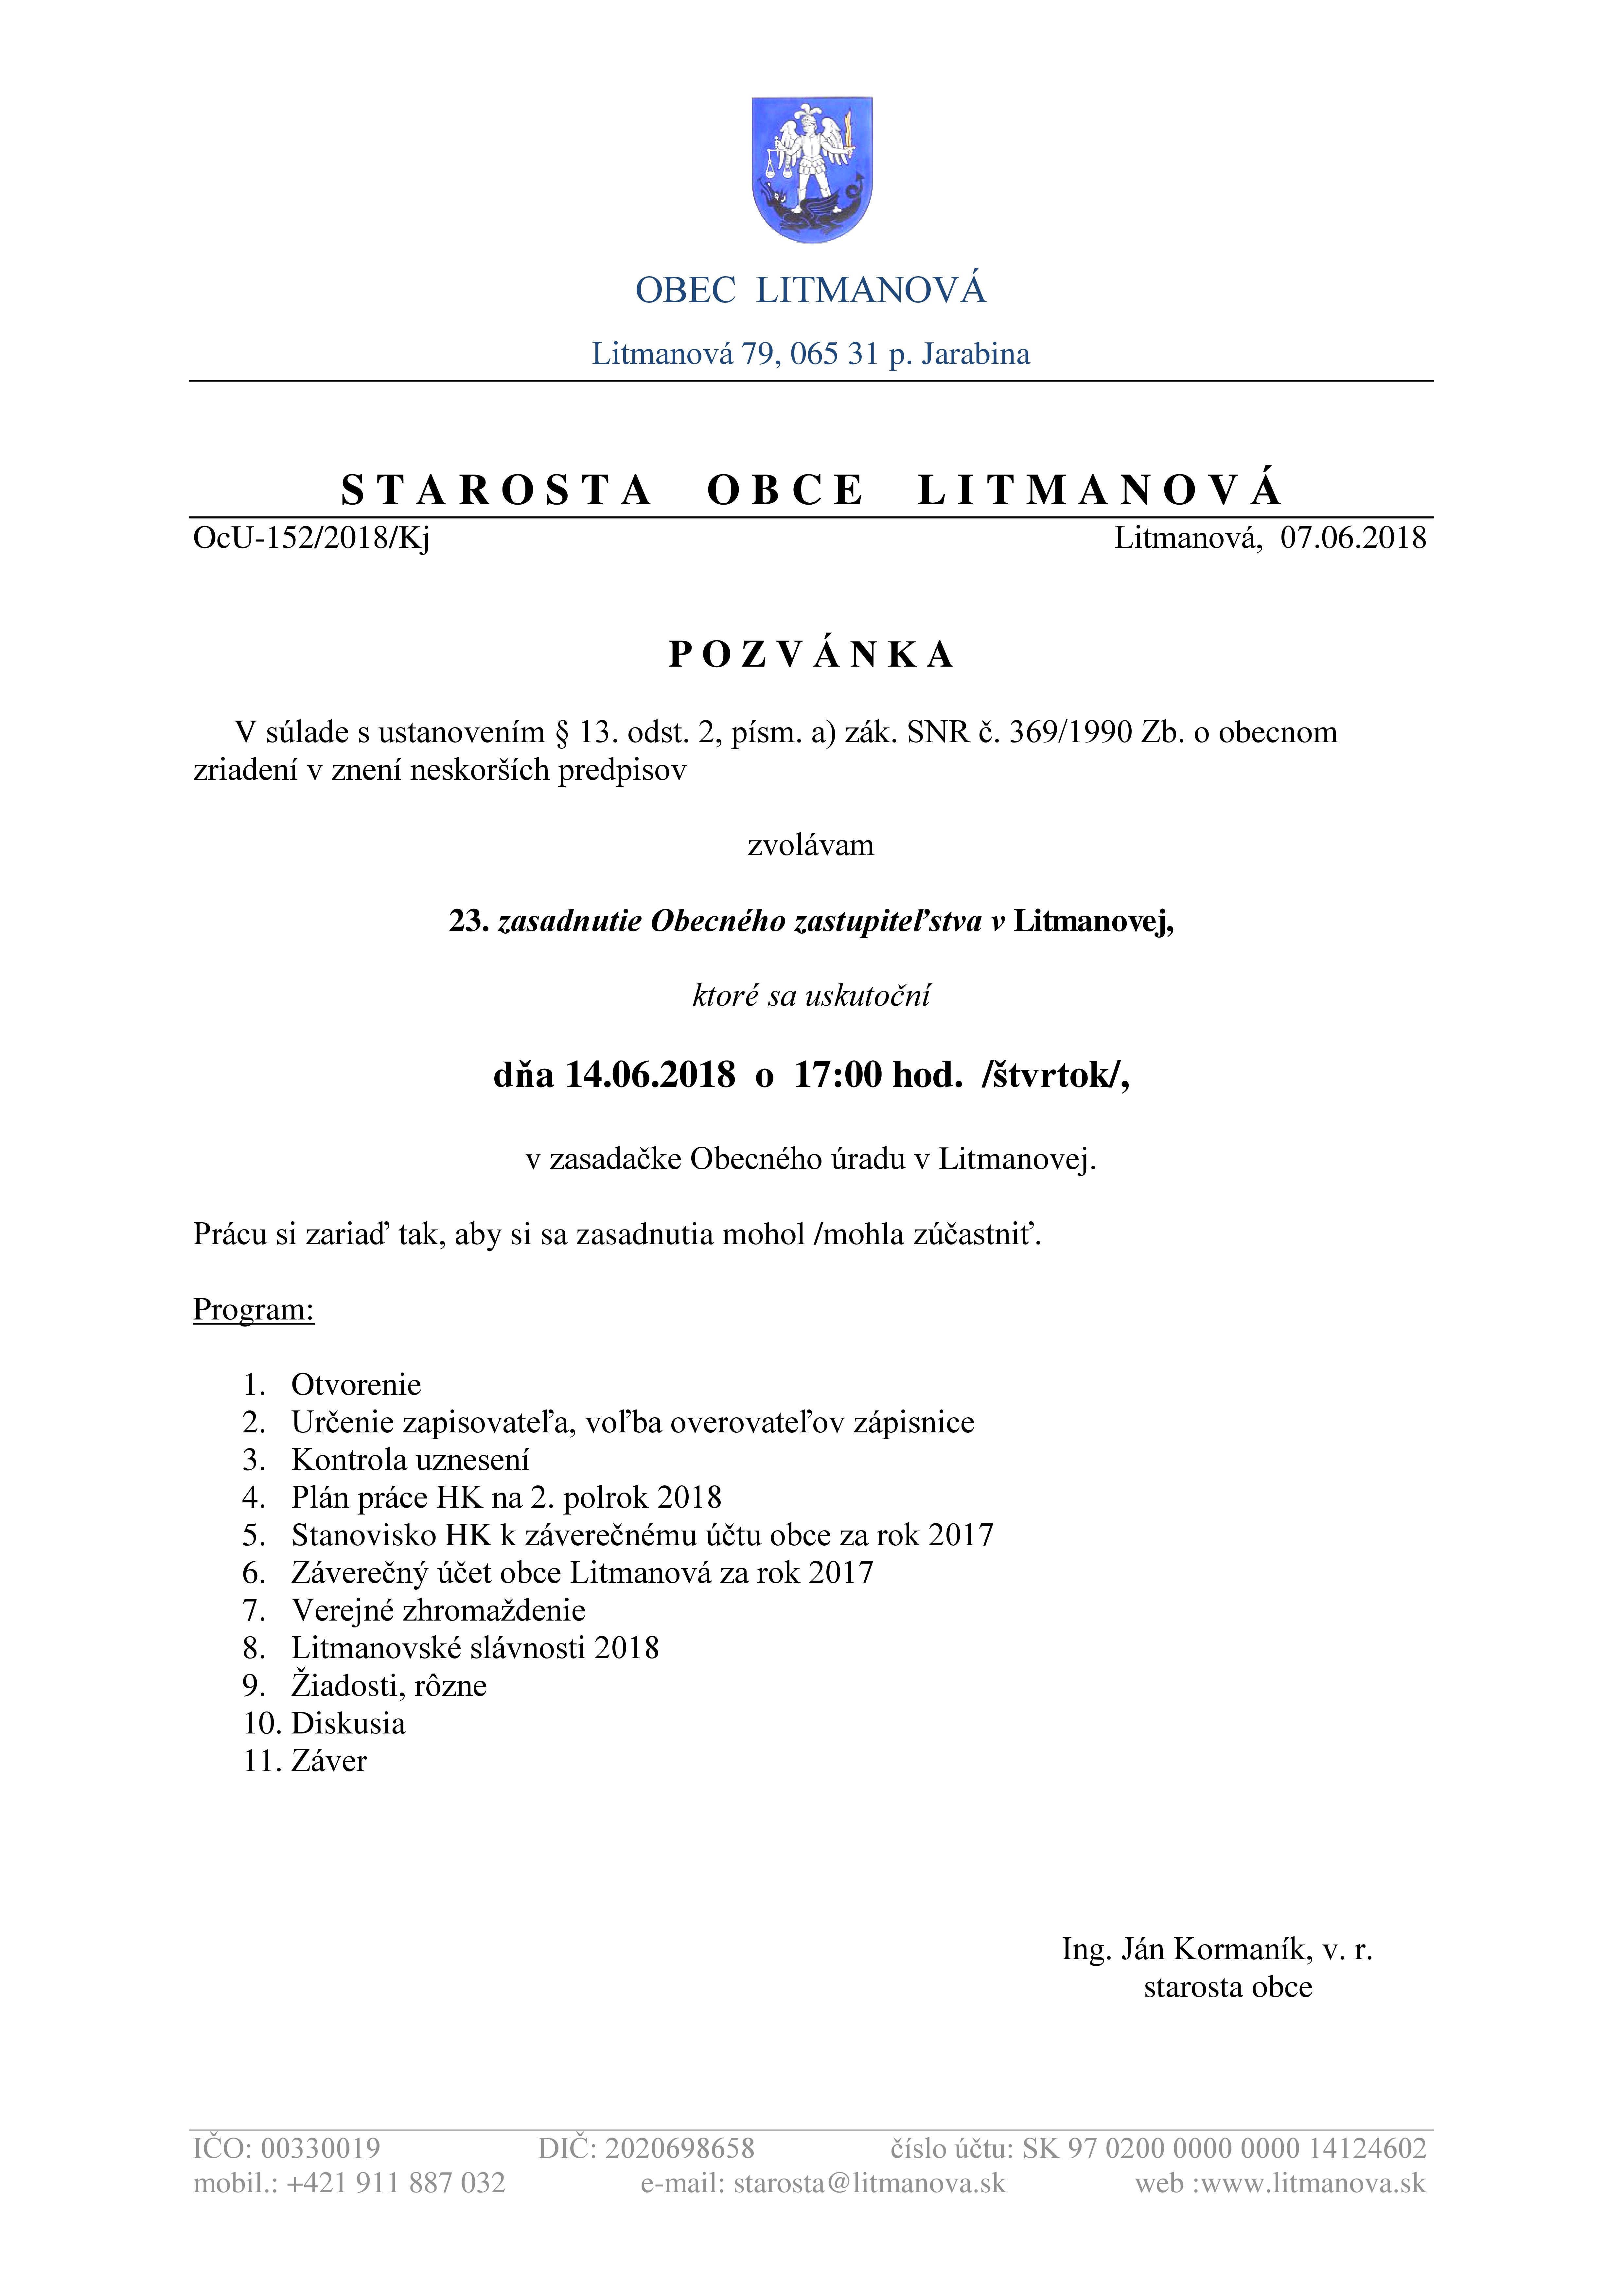 http://www.litmanova.sk/sk/rse/img.php?class=img&id=2144